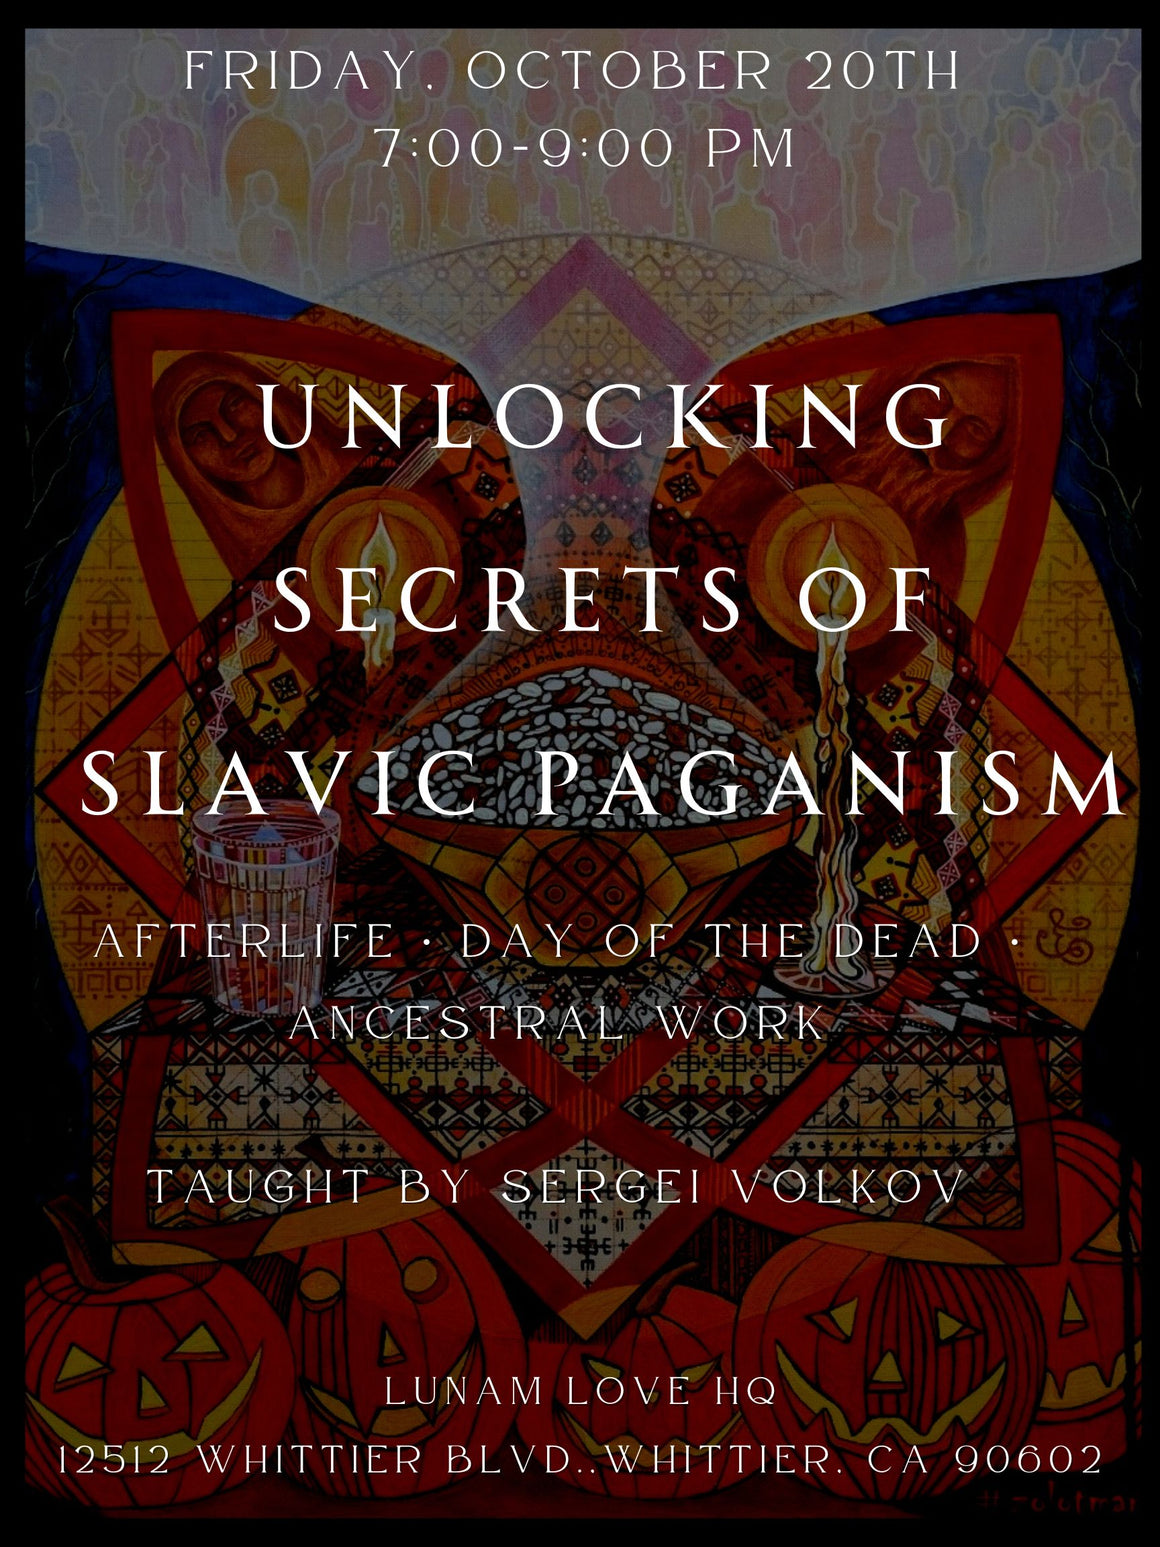 Unlock the Secrets of Slavic Paganism - October 20th